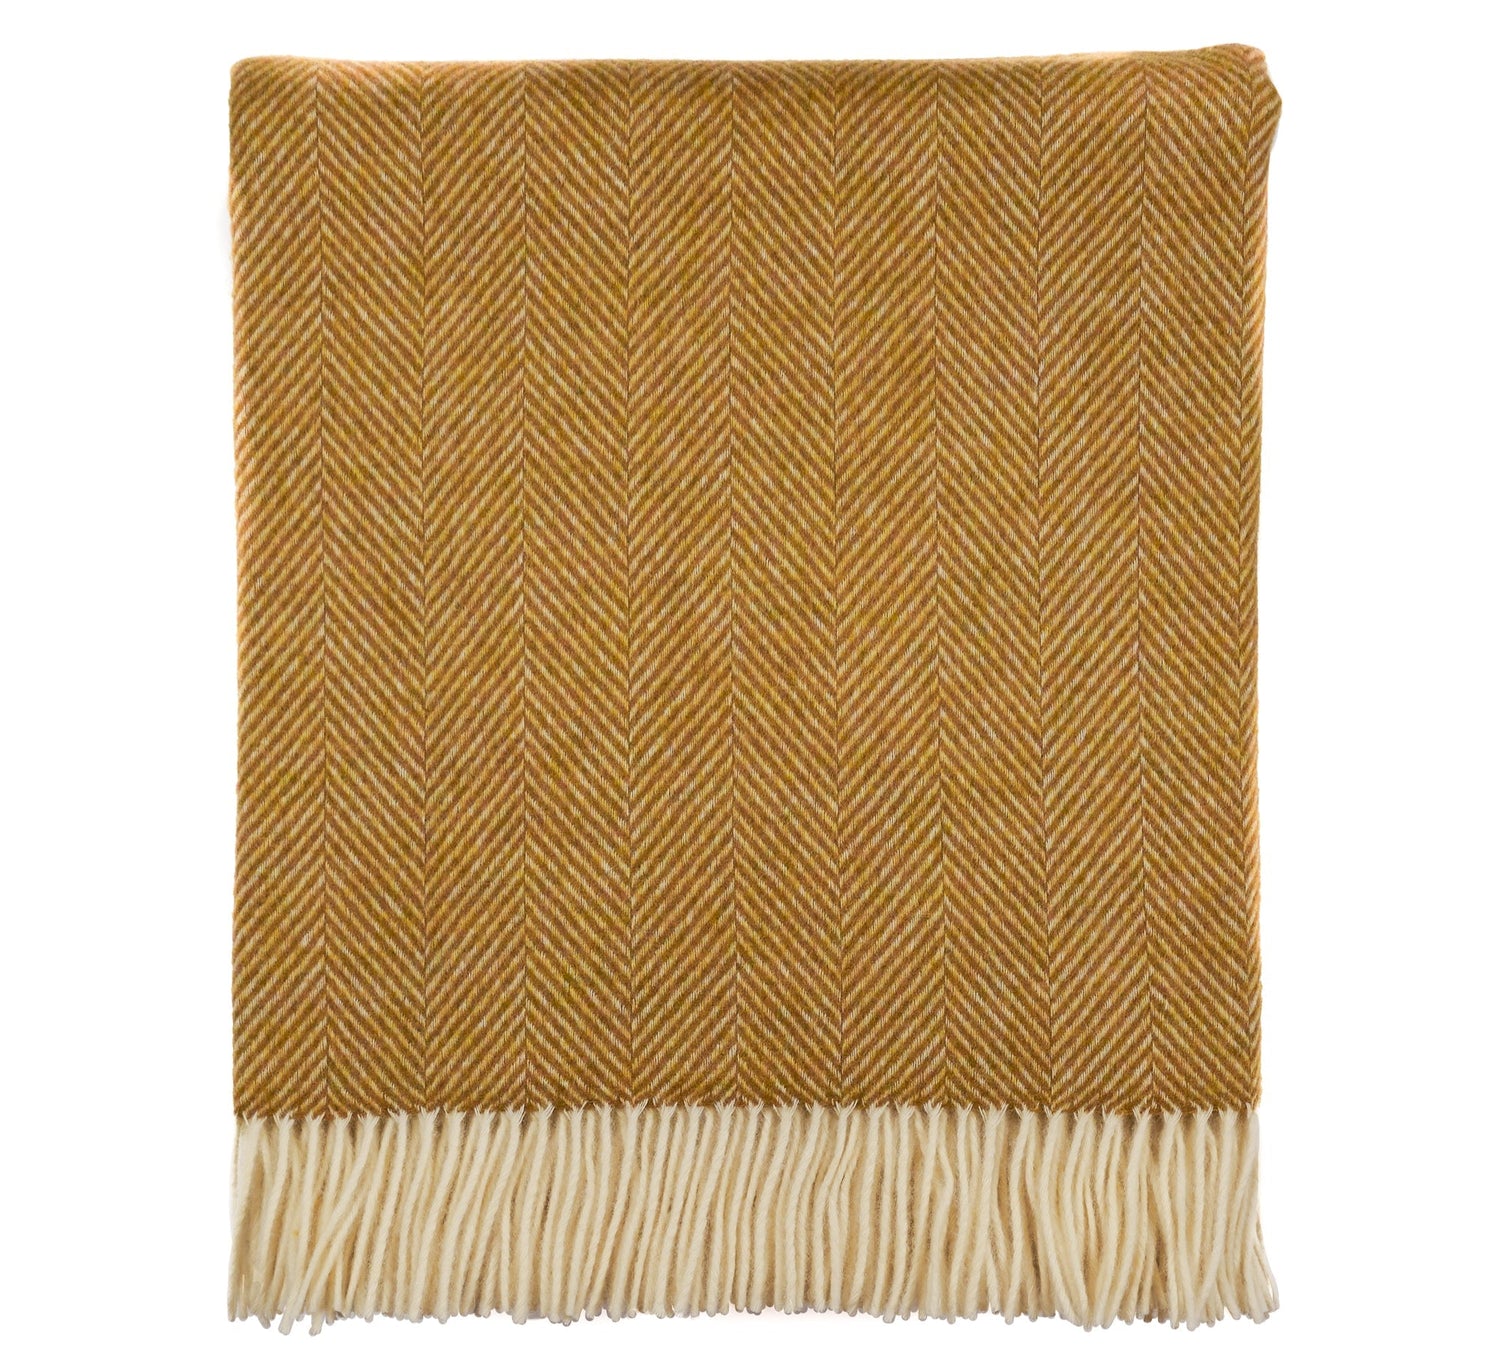 Southampton Home Merino Wool Herringbone Throw (Gold)-Throws and Blankets-Q029006-Prince of Scots